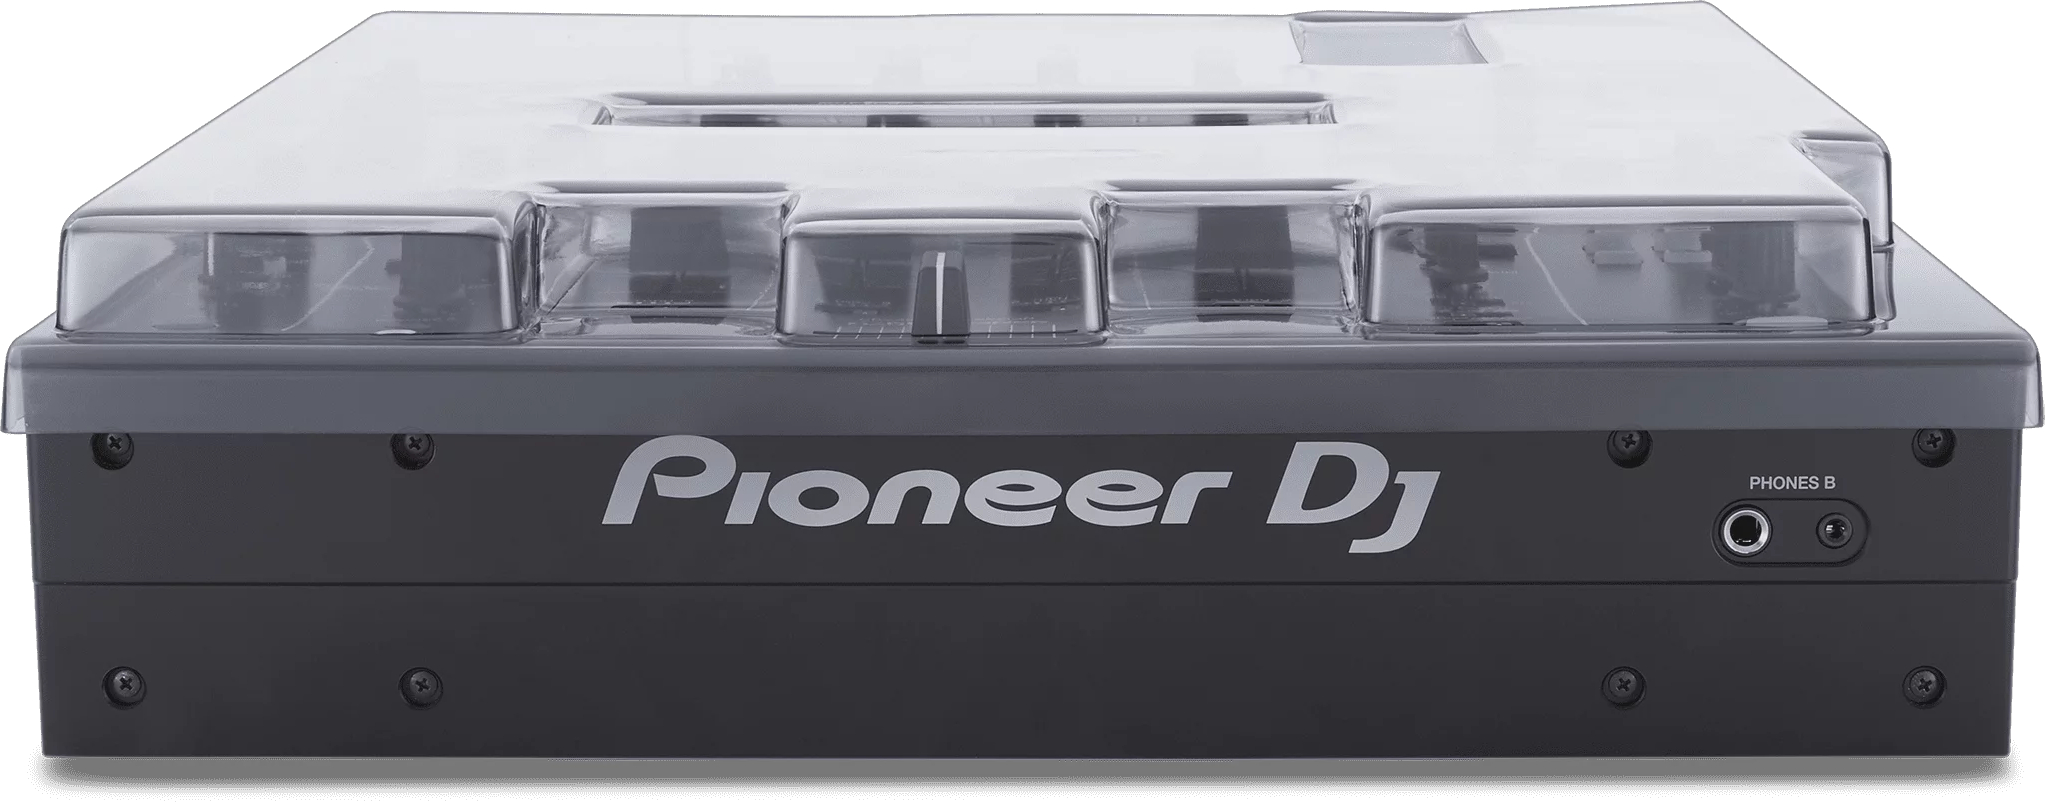 Decksaver Pioneer Dj Djm-a9 Cover - DJ hoes - Variation 2